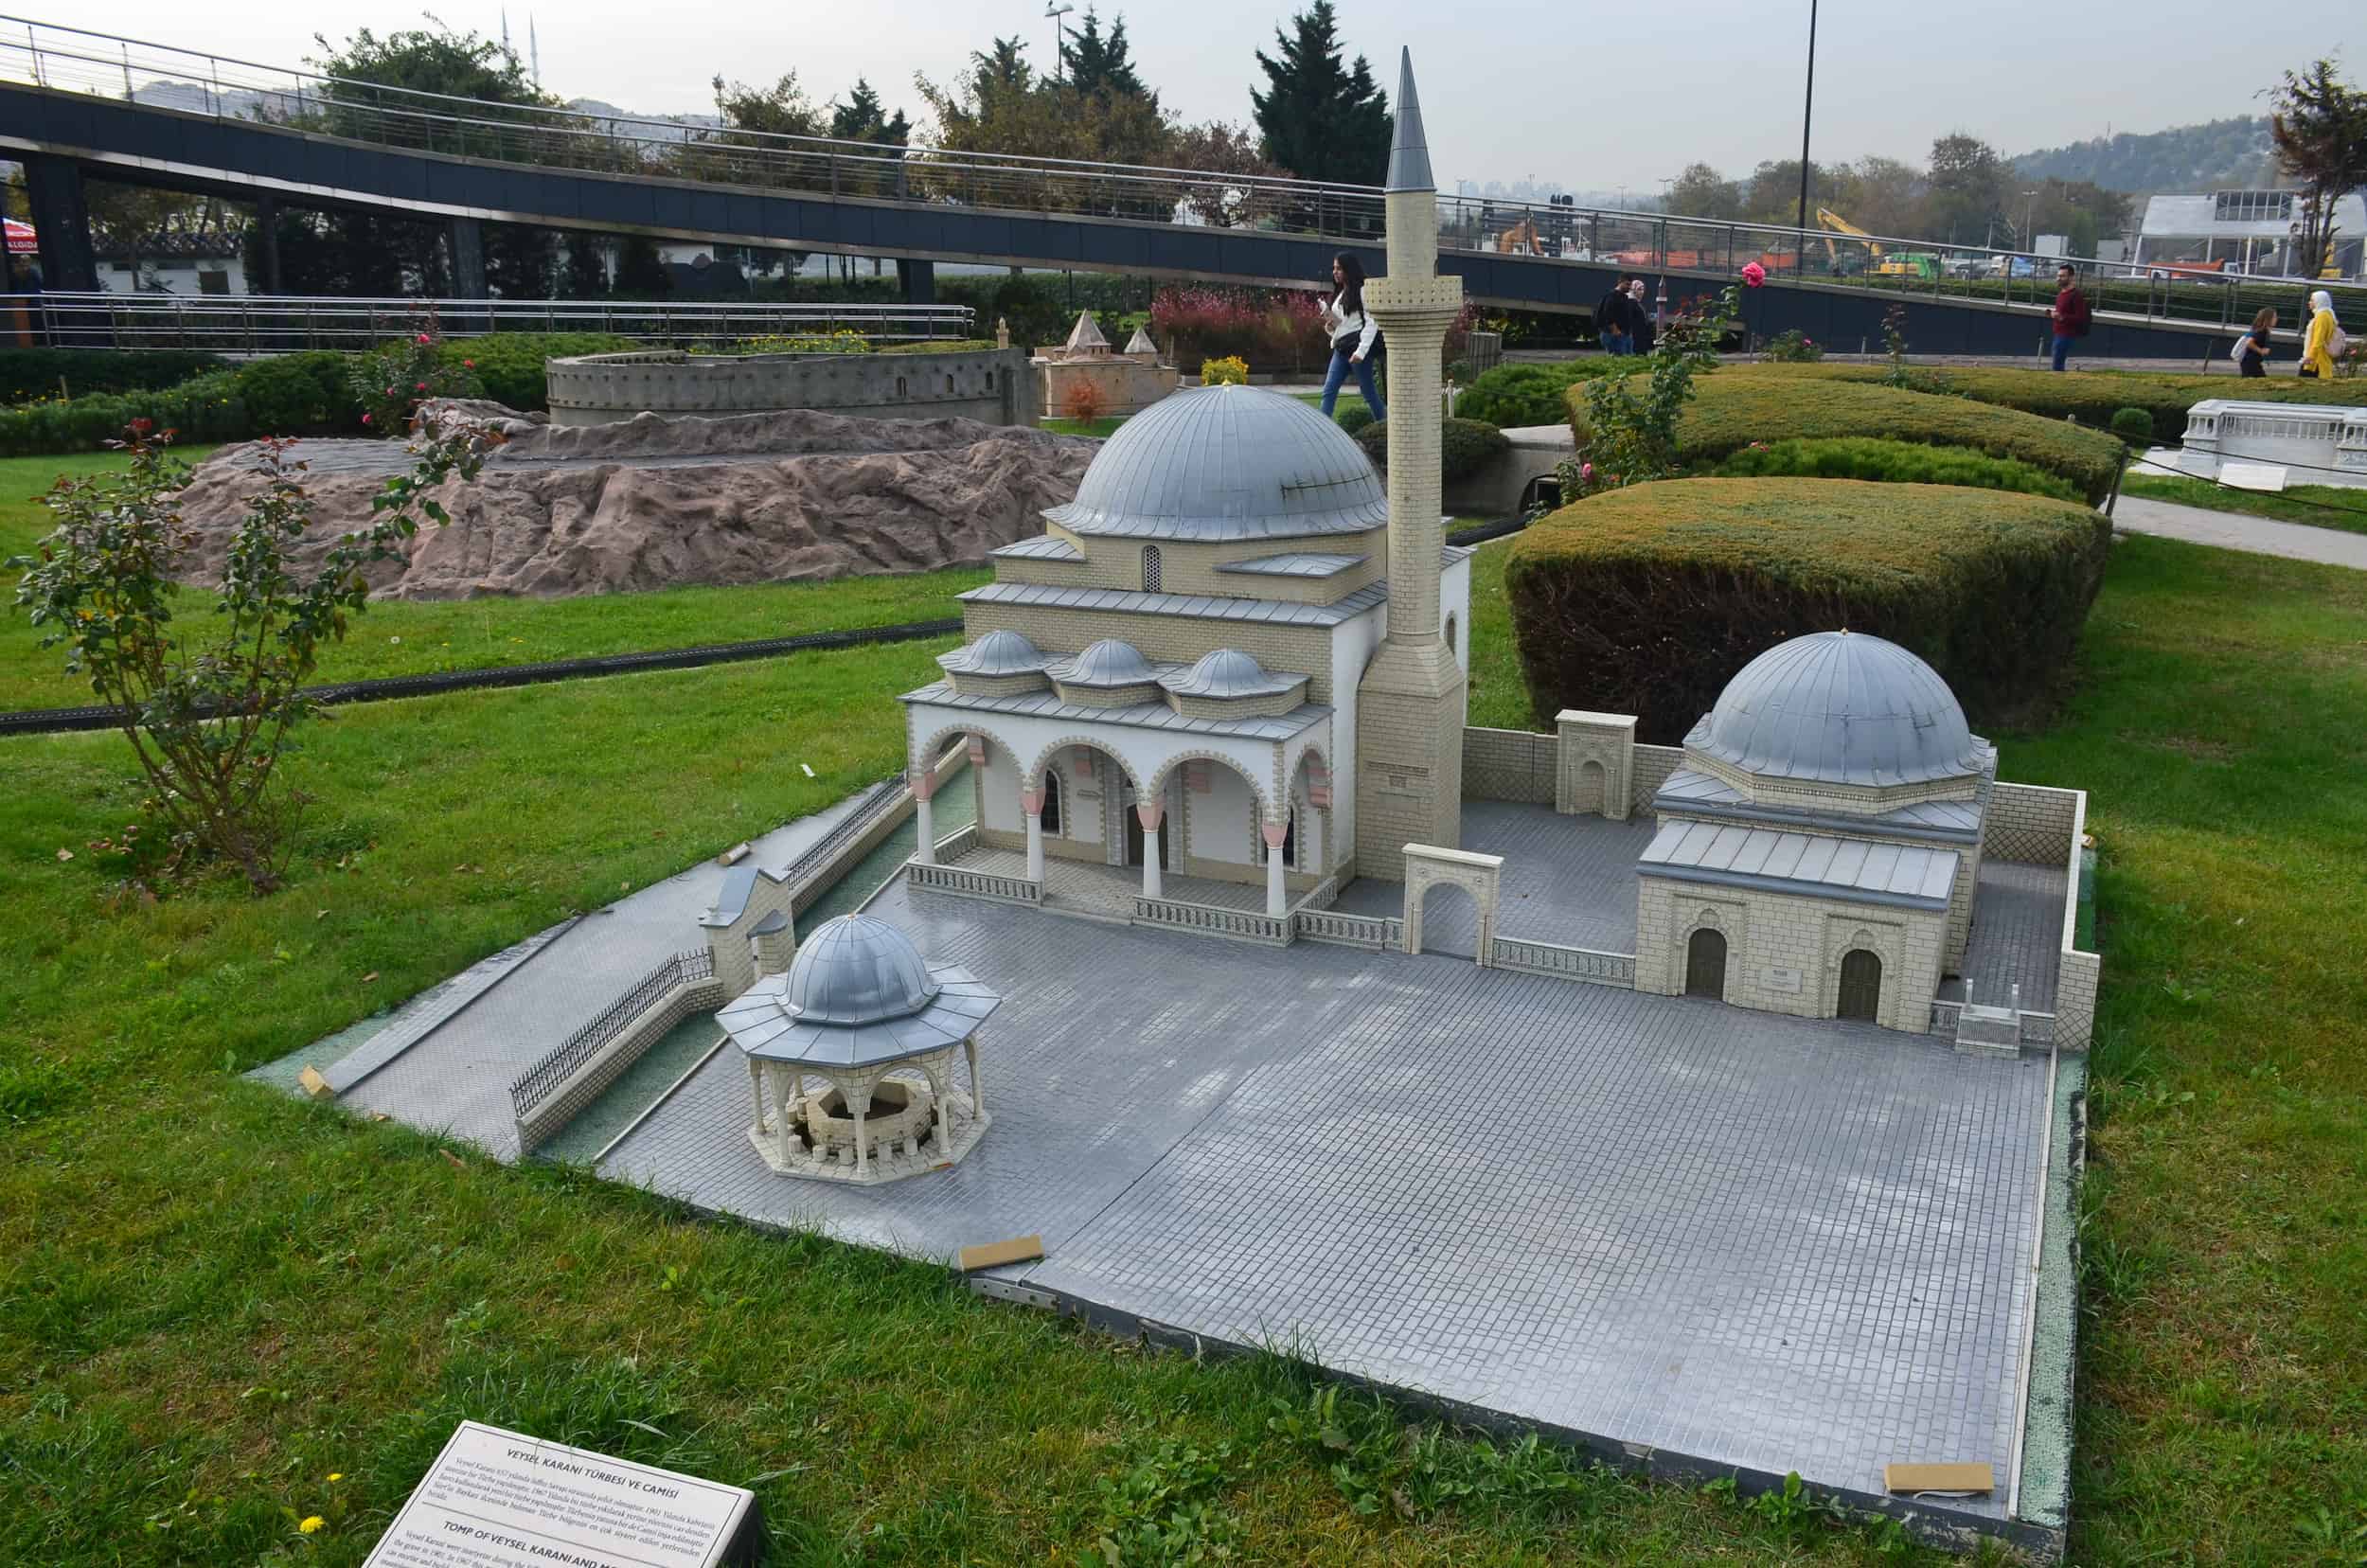 Model of the Veysel Karani Mosque and Tomb, Veyselkarani, 20th century at Miniatürk in Istanbul, Turkey